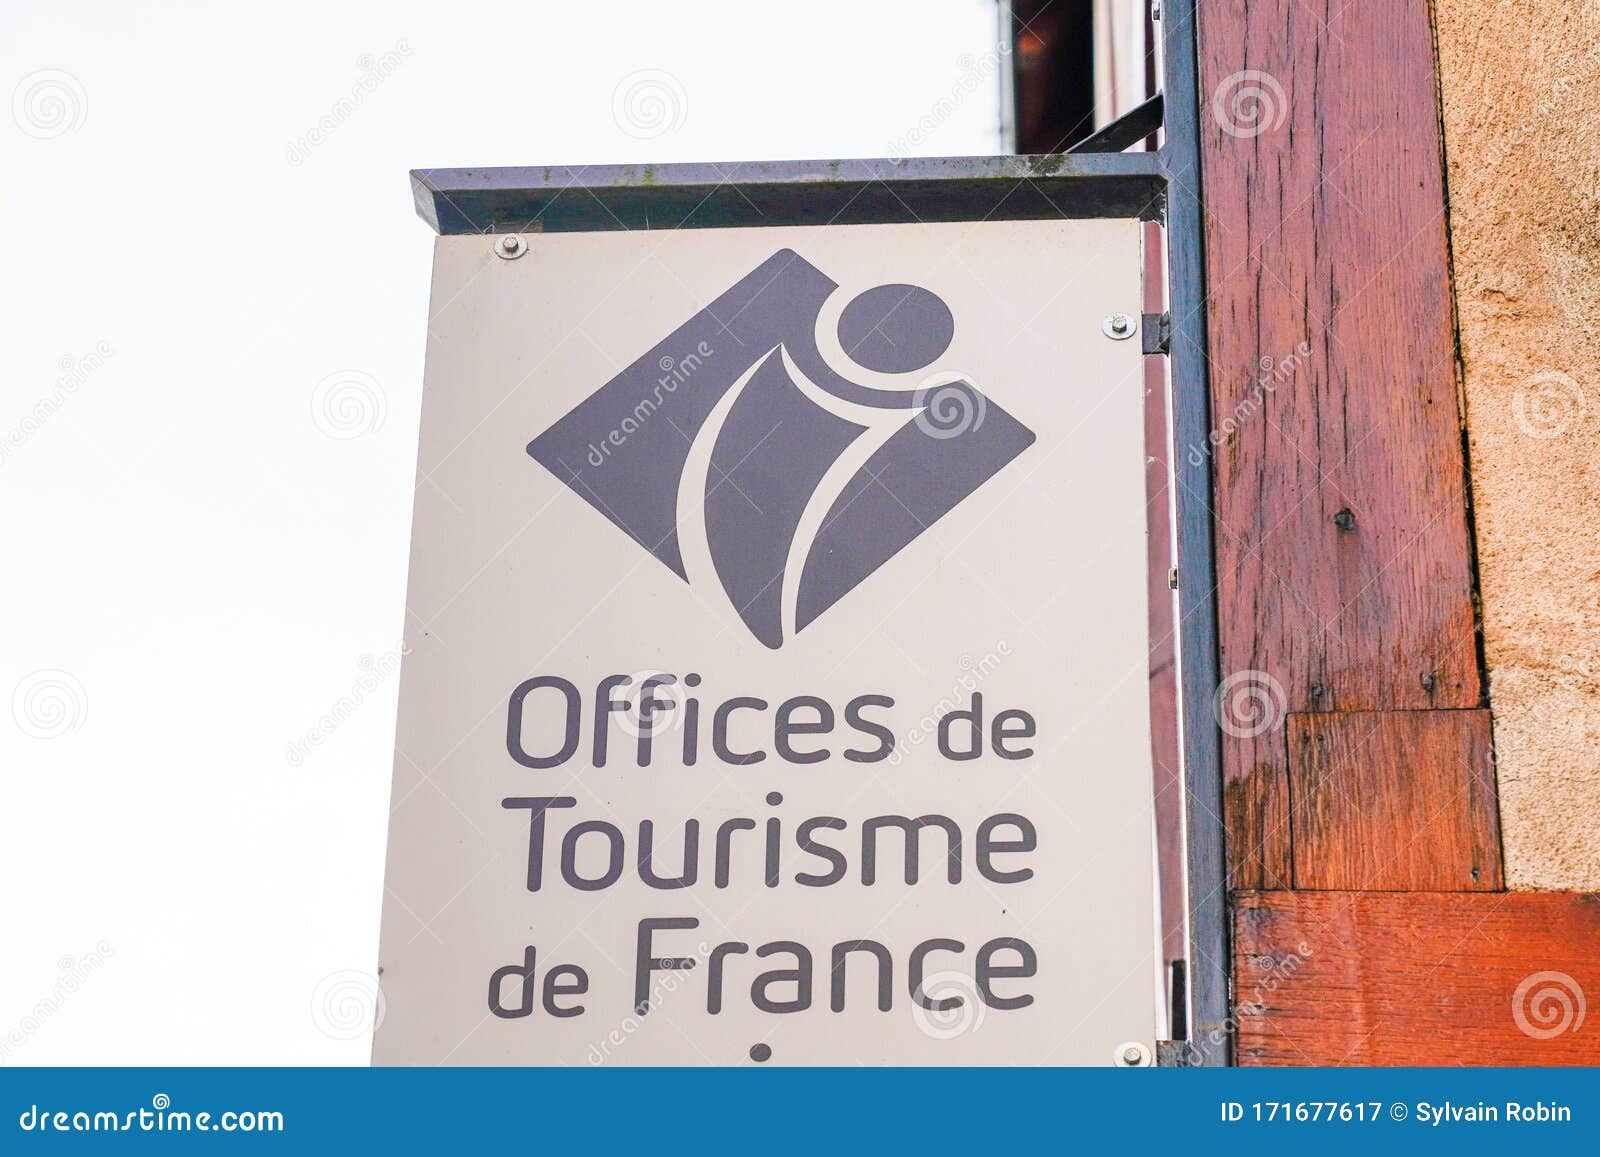 france tourist office uk